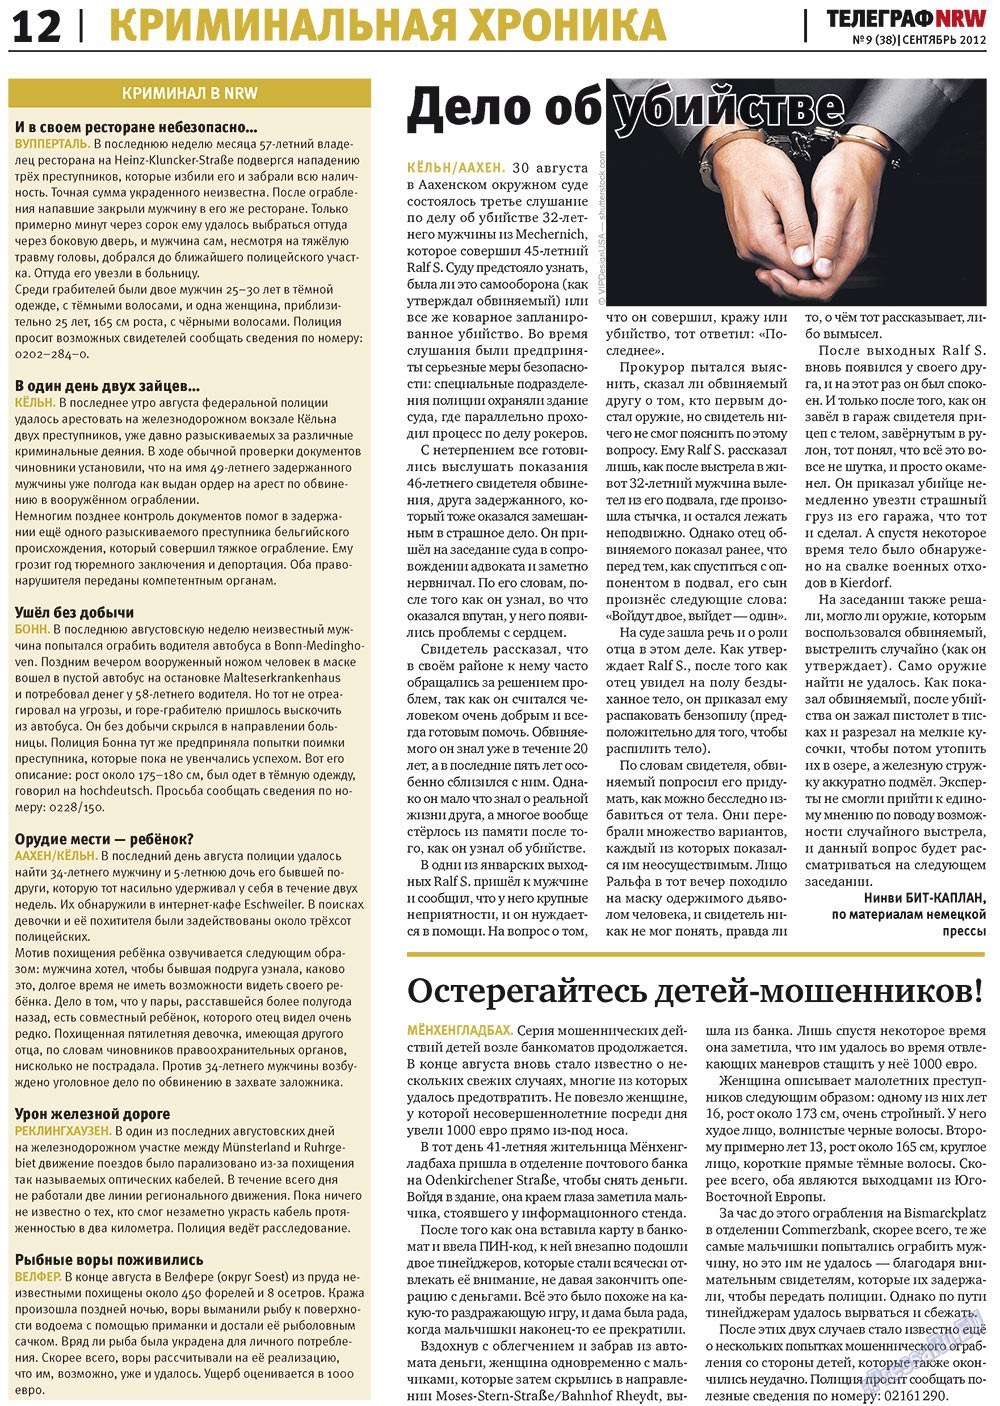 Телеграф NRW, газета. 2012 №9 стр.12